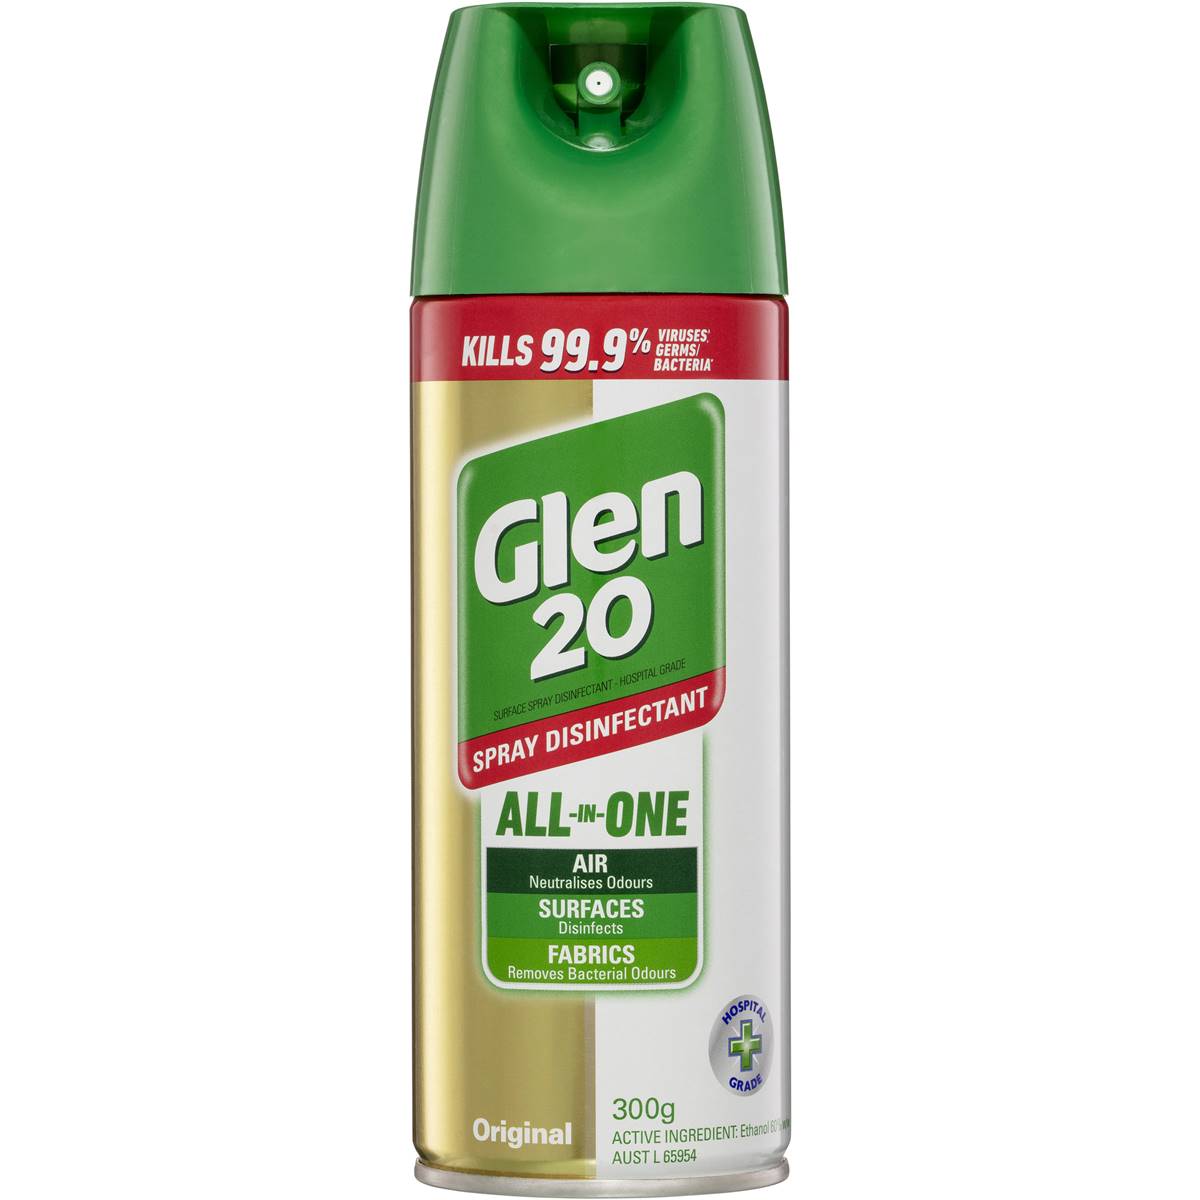 Dettol Glen 20 Spray Disinfectant Original